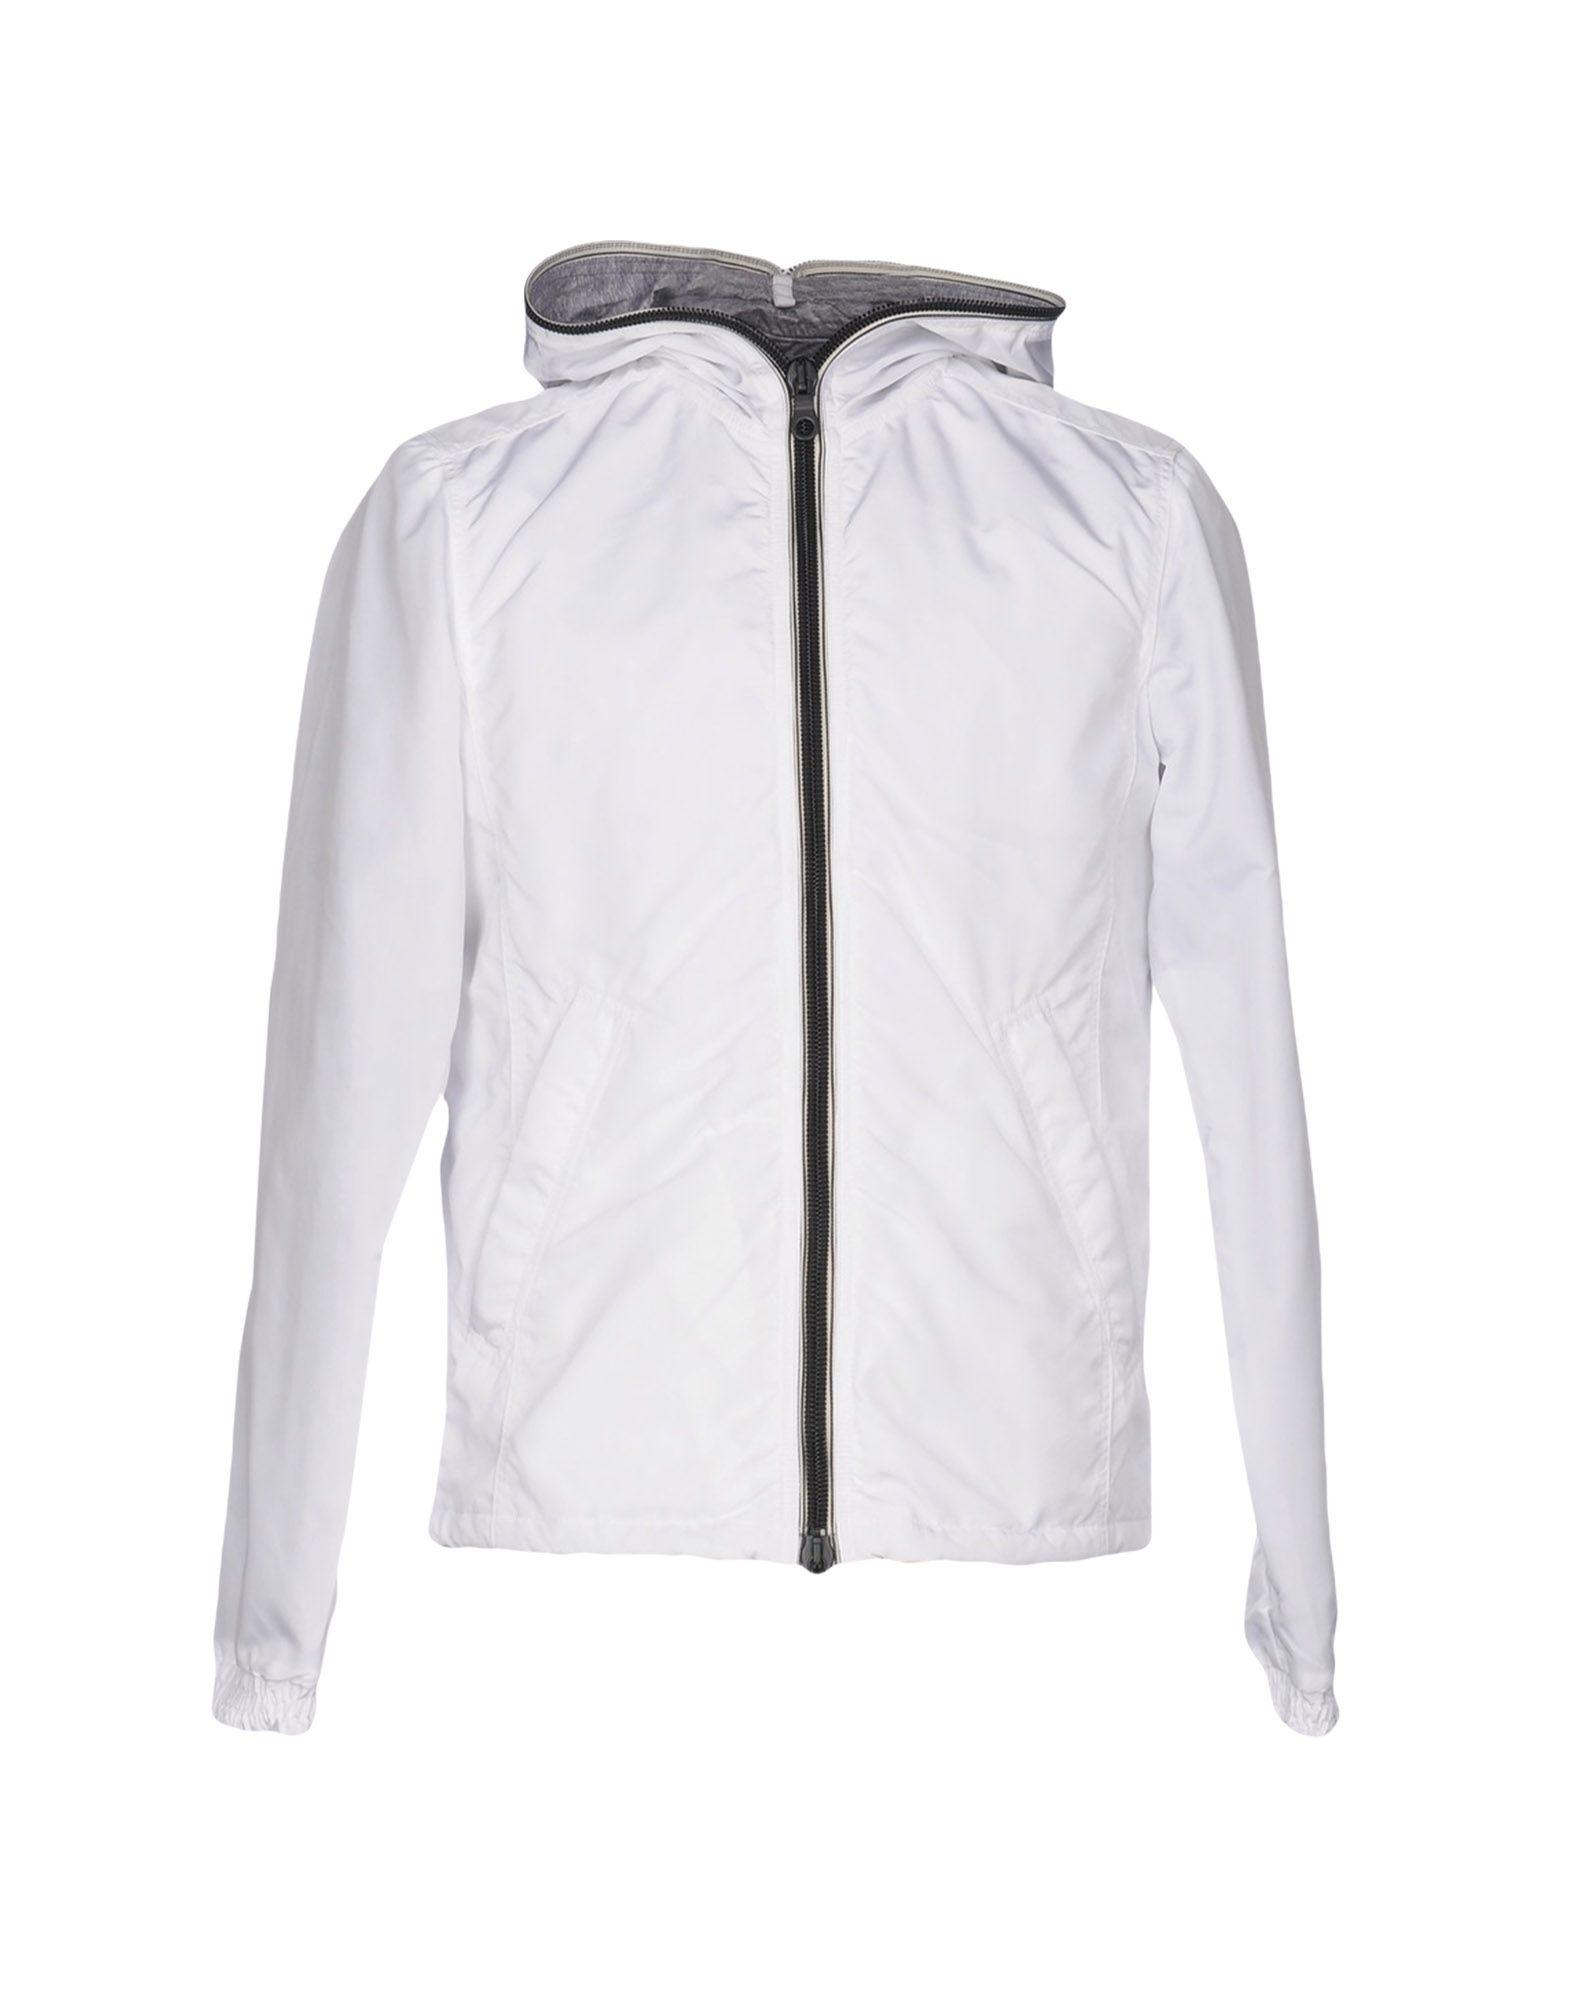 Lyst - Duvetica Down Jacket in White for Men